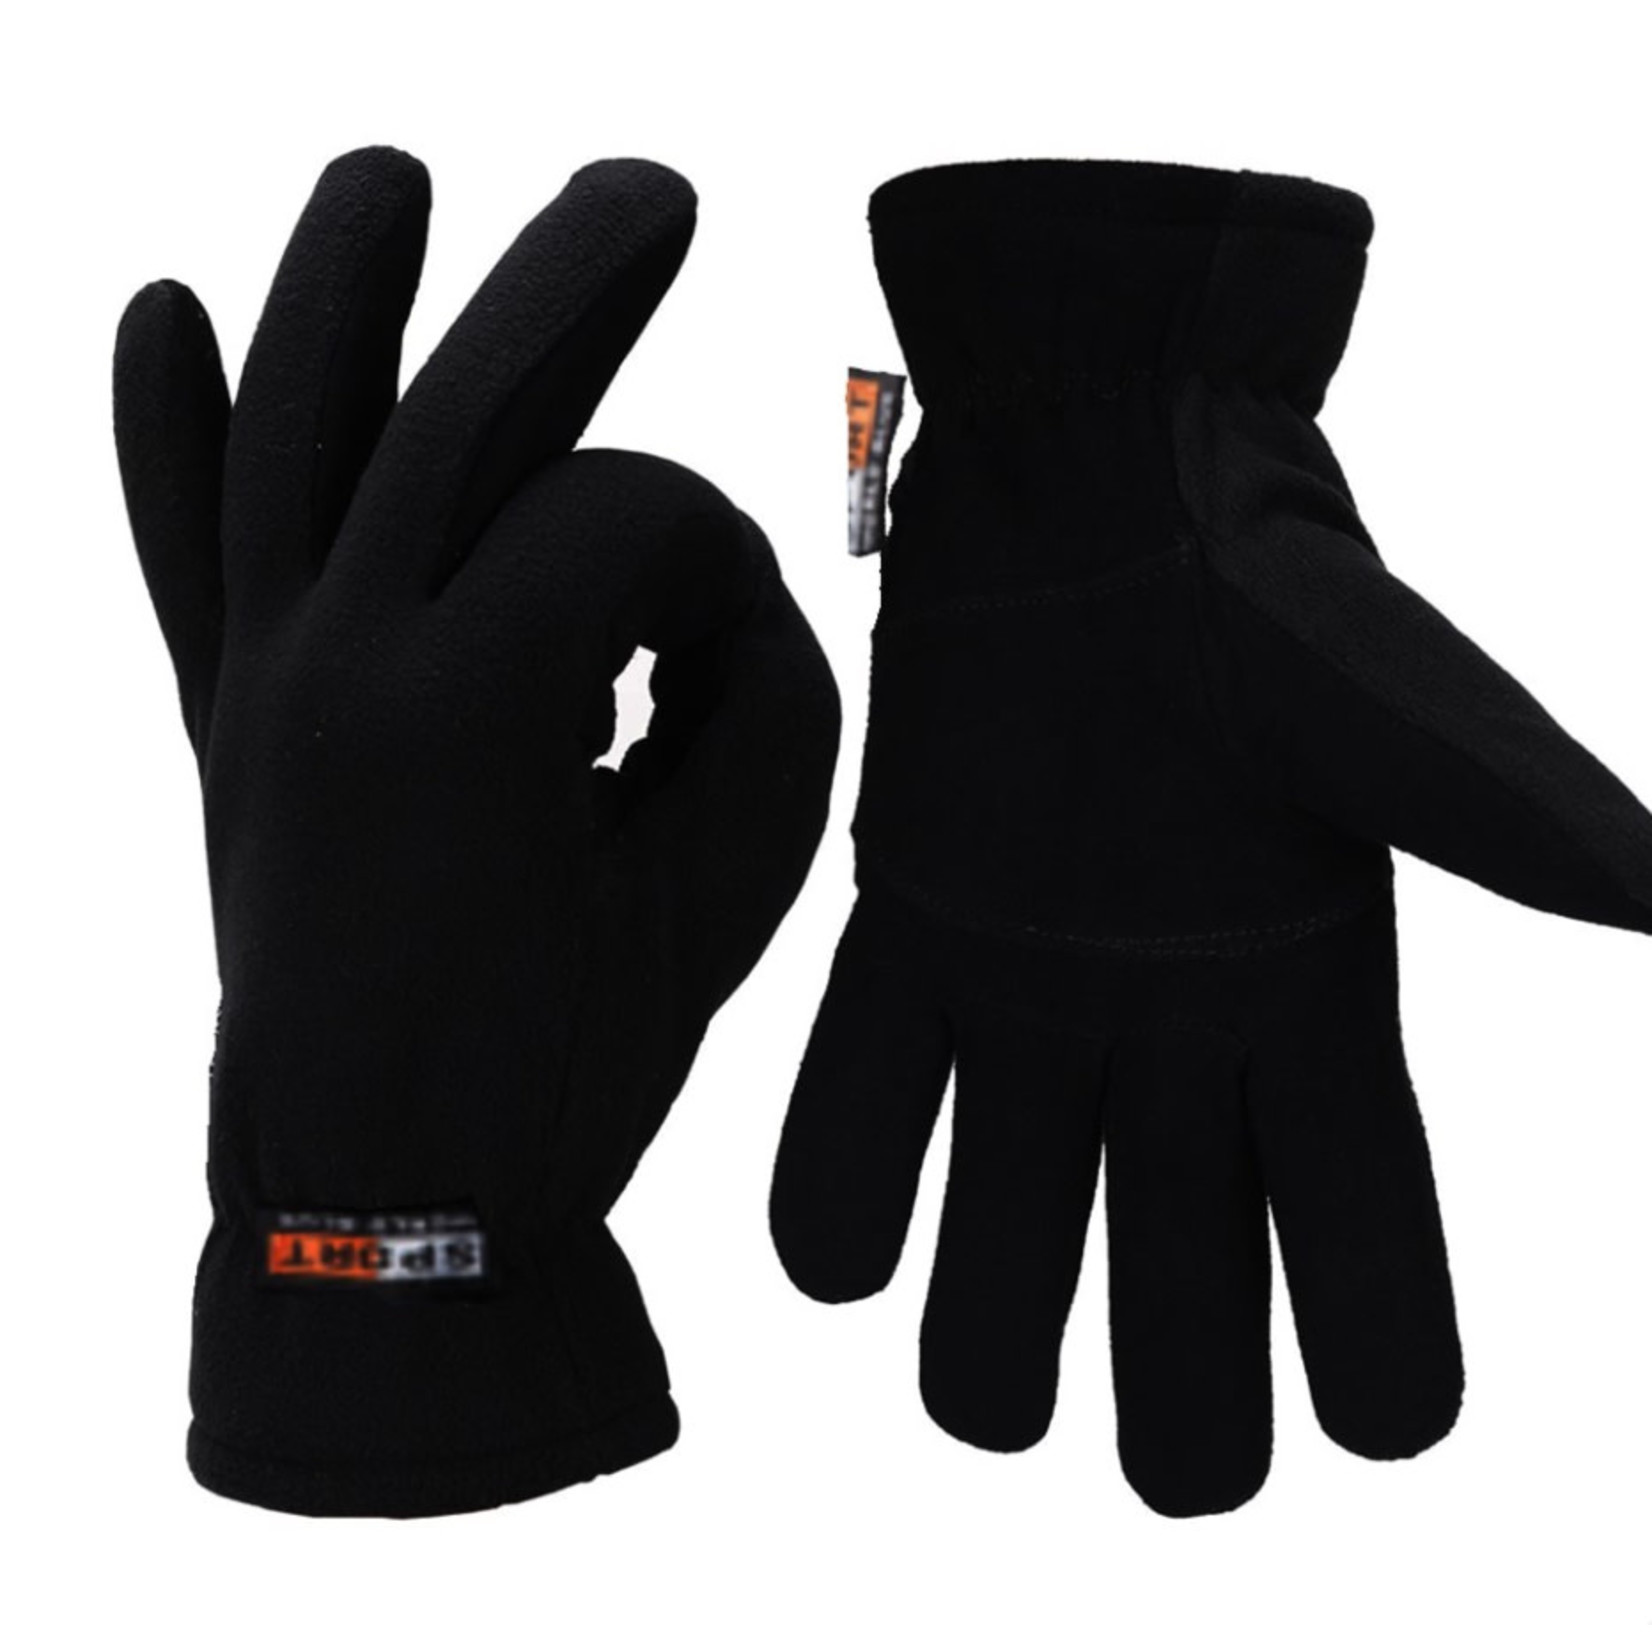 Minky Accessories Men’s Winter Gloves Fleece Black